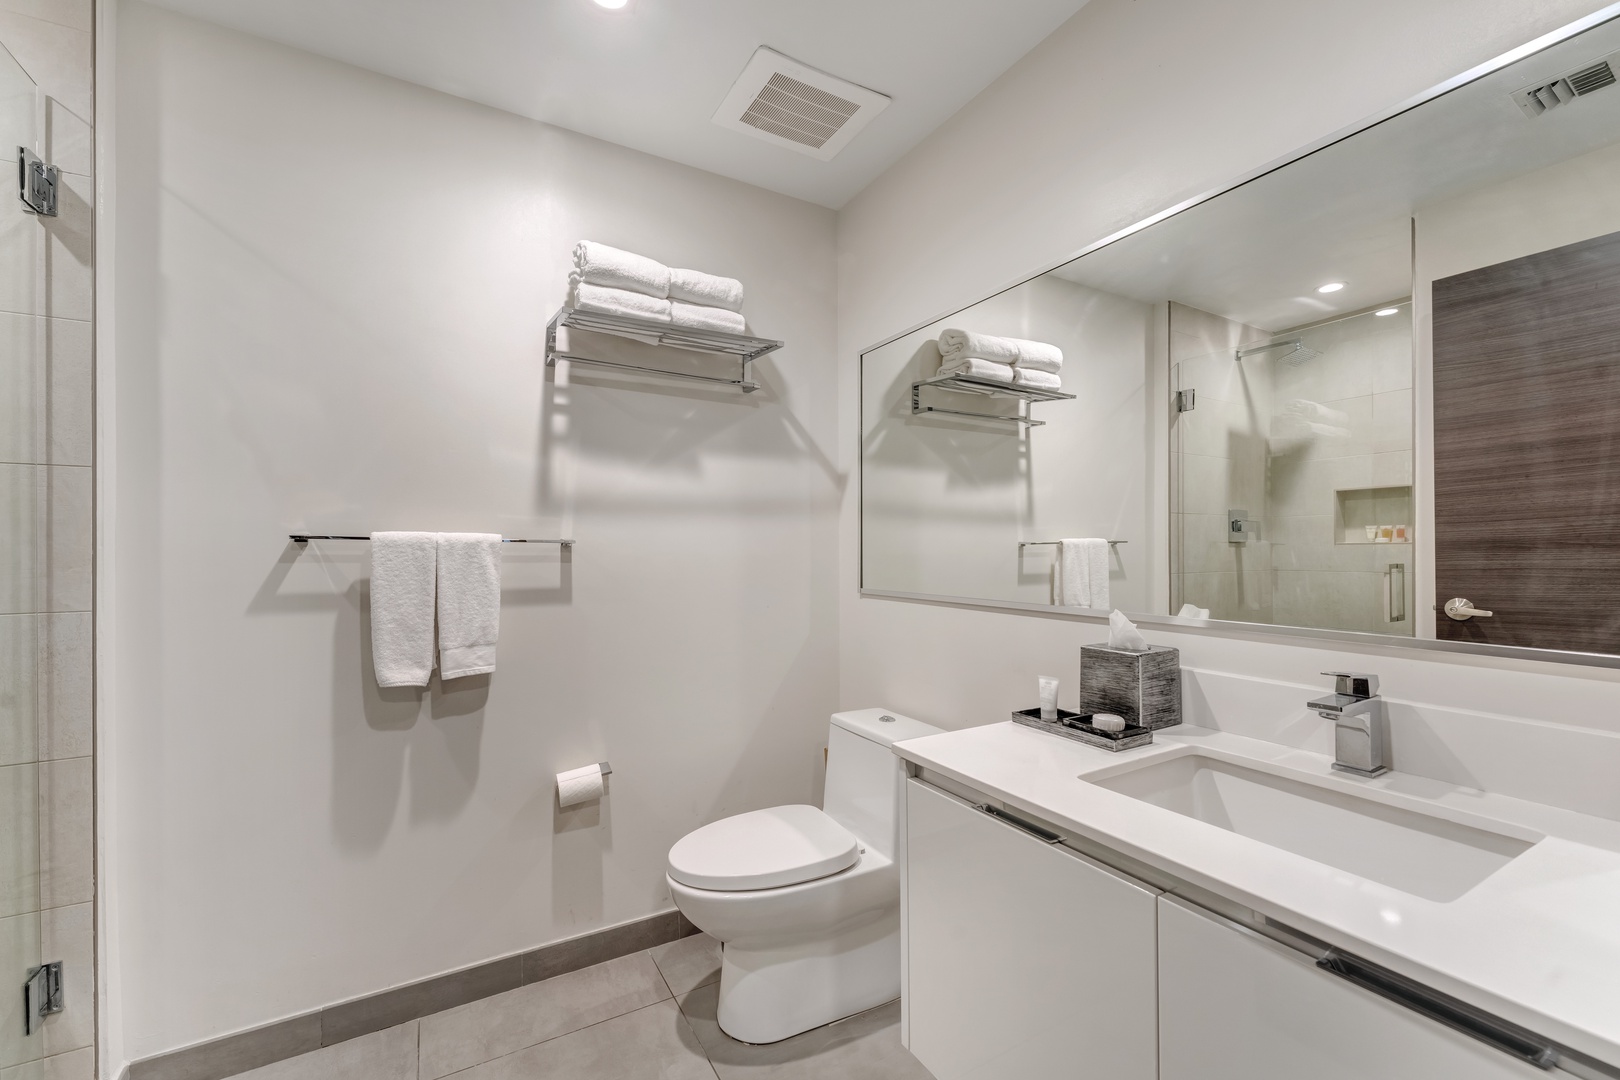 The full bathroom offers a single vanity & spa-like glass shower